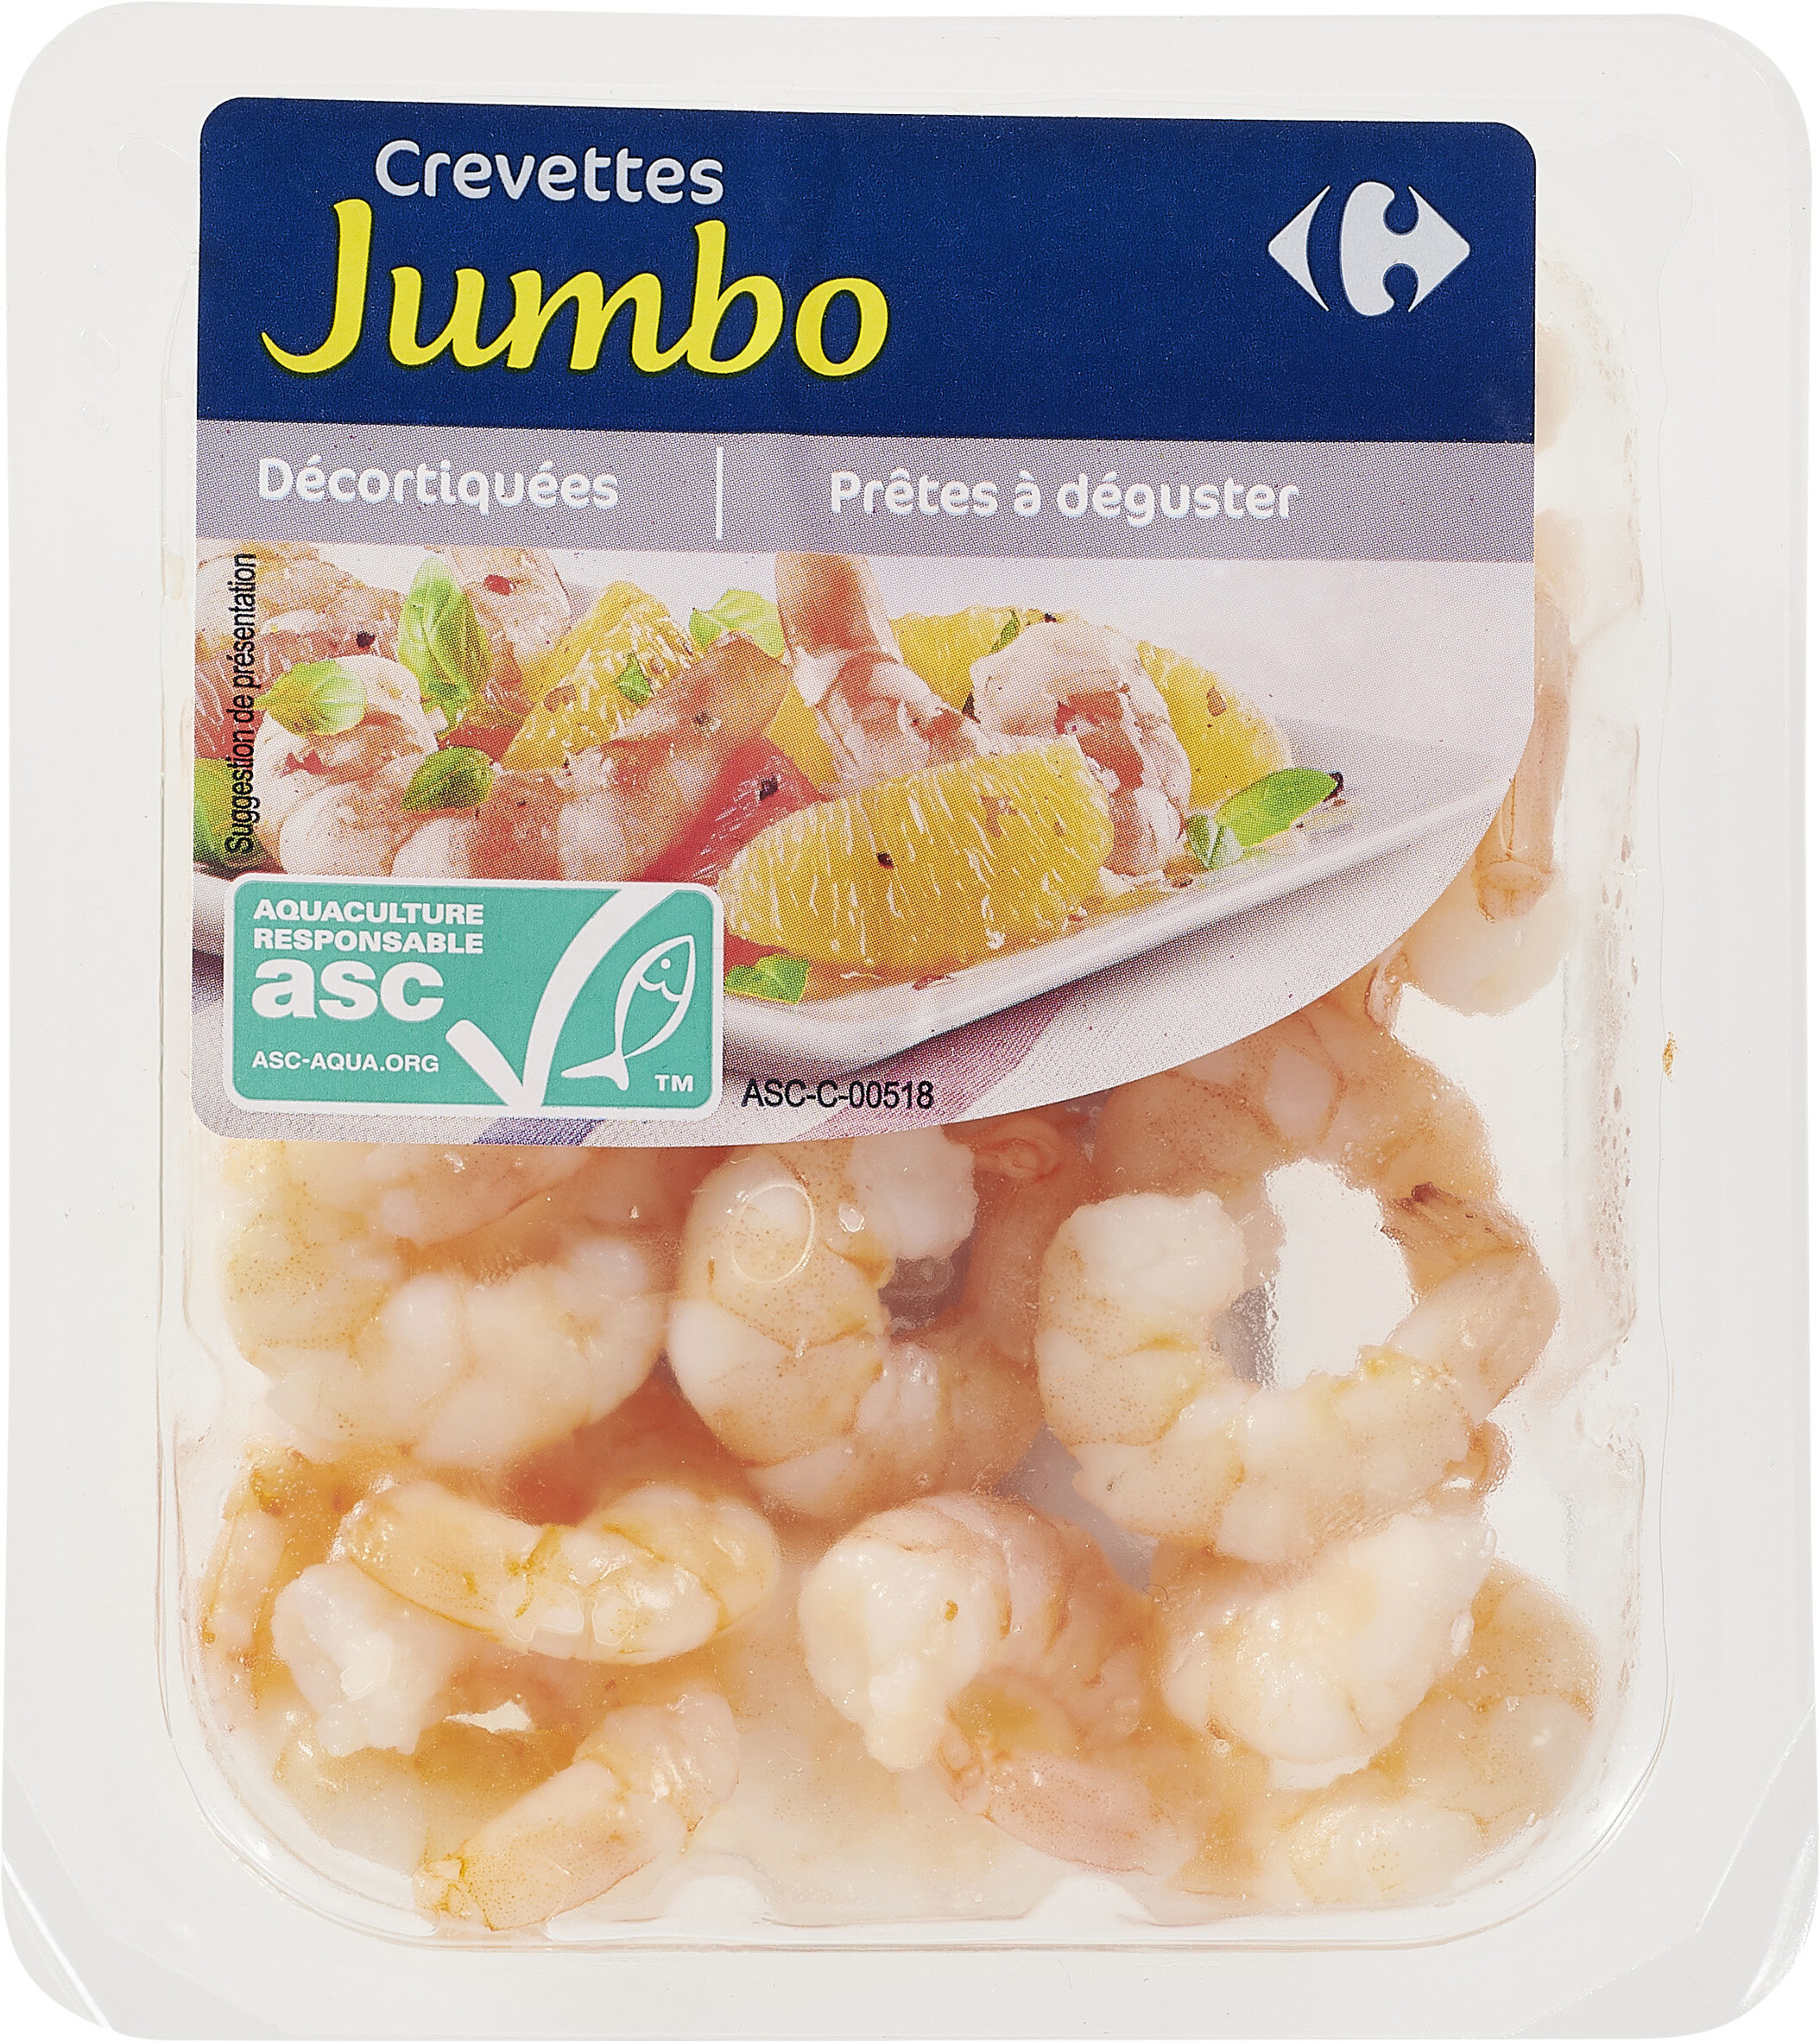 Crevettes Jumbo - Product - fr